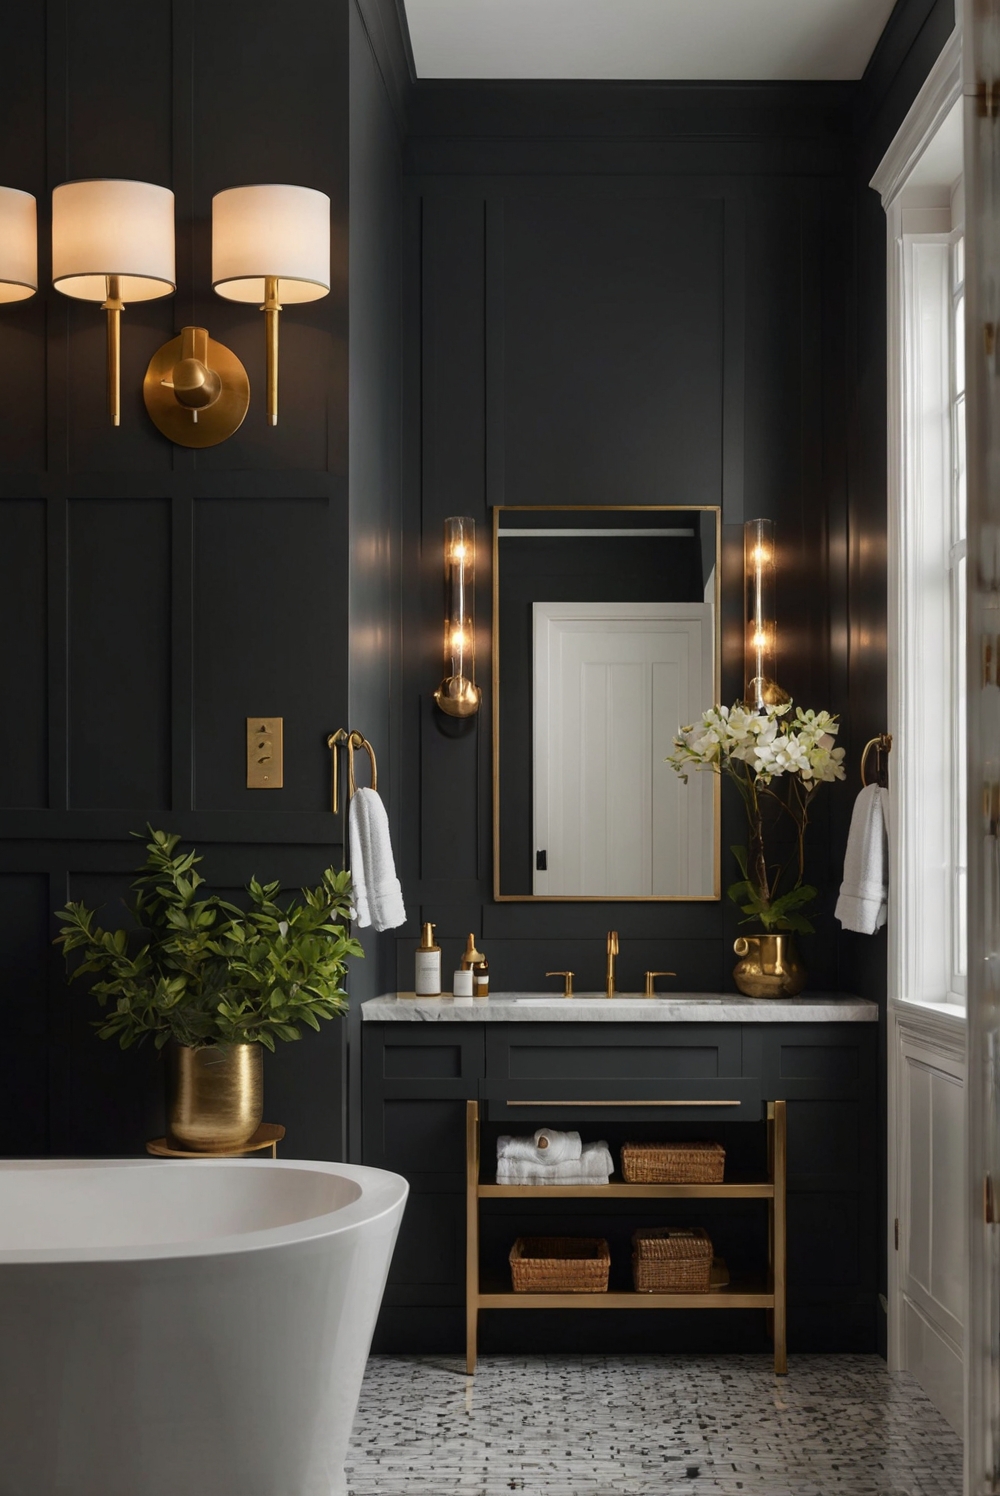 Urbane Bronze, urban chic, sophisticated bathroom, bathroom design, interior design, home decor, paint color match